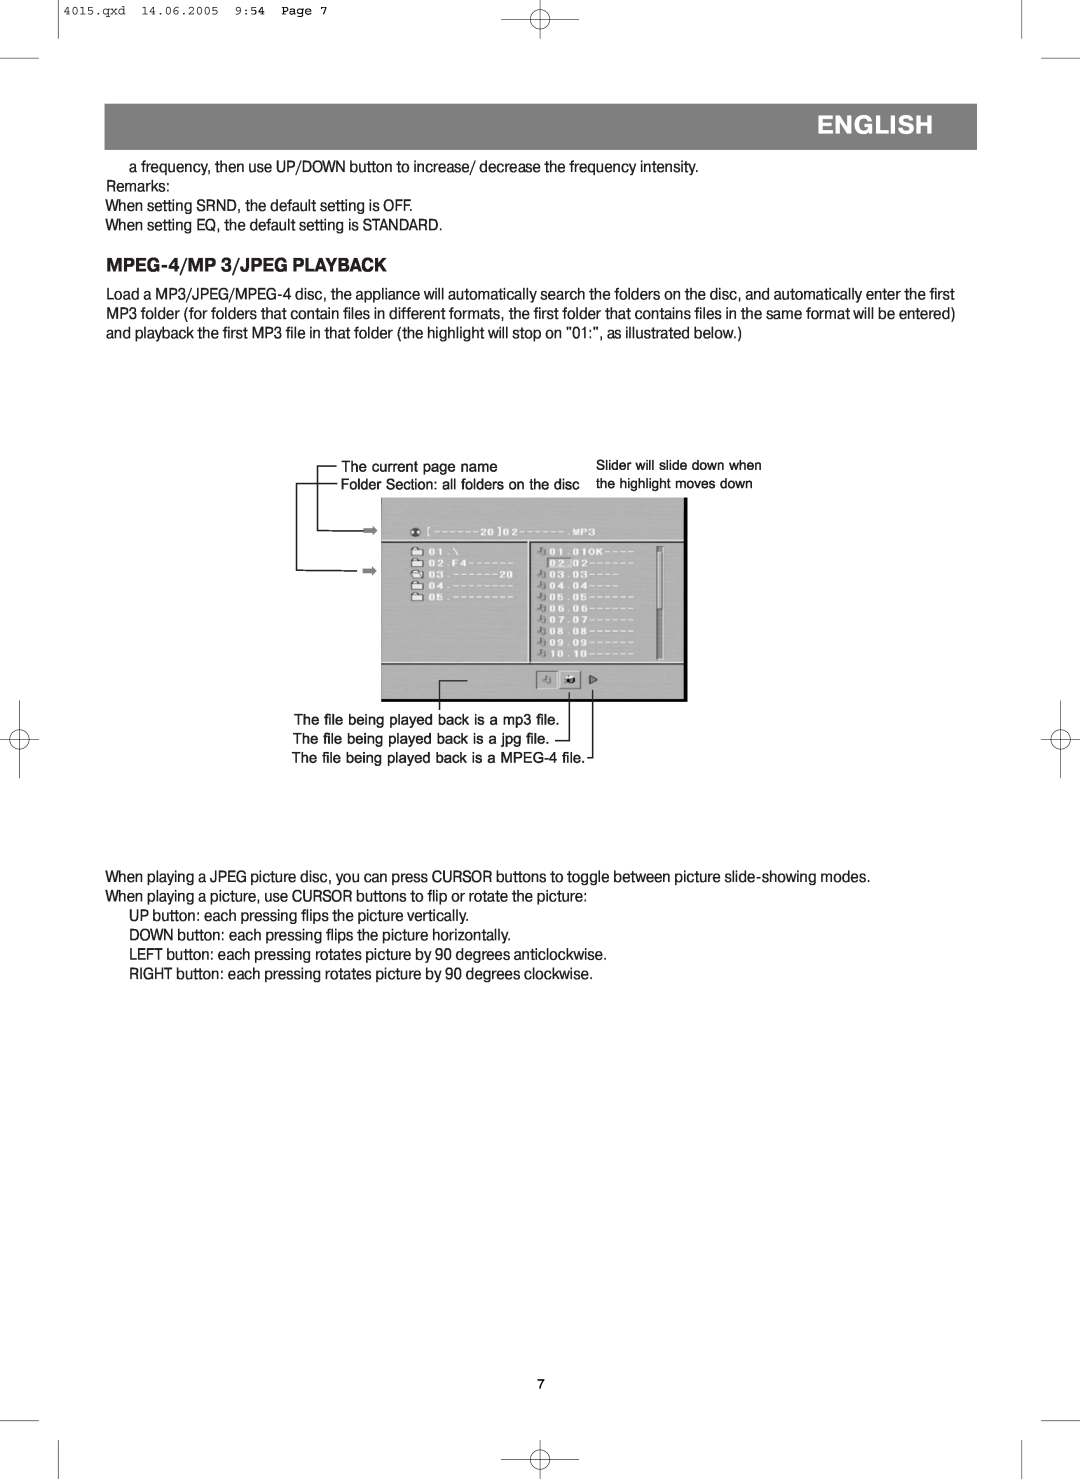 LG Electronics VT 4015 instruction manual MPEG3/JPEG PLAYBACK, English 